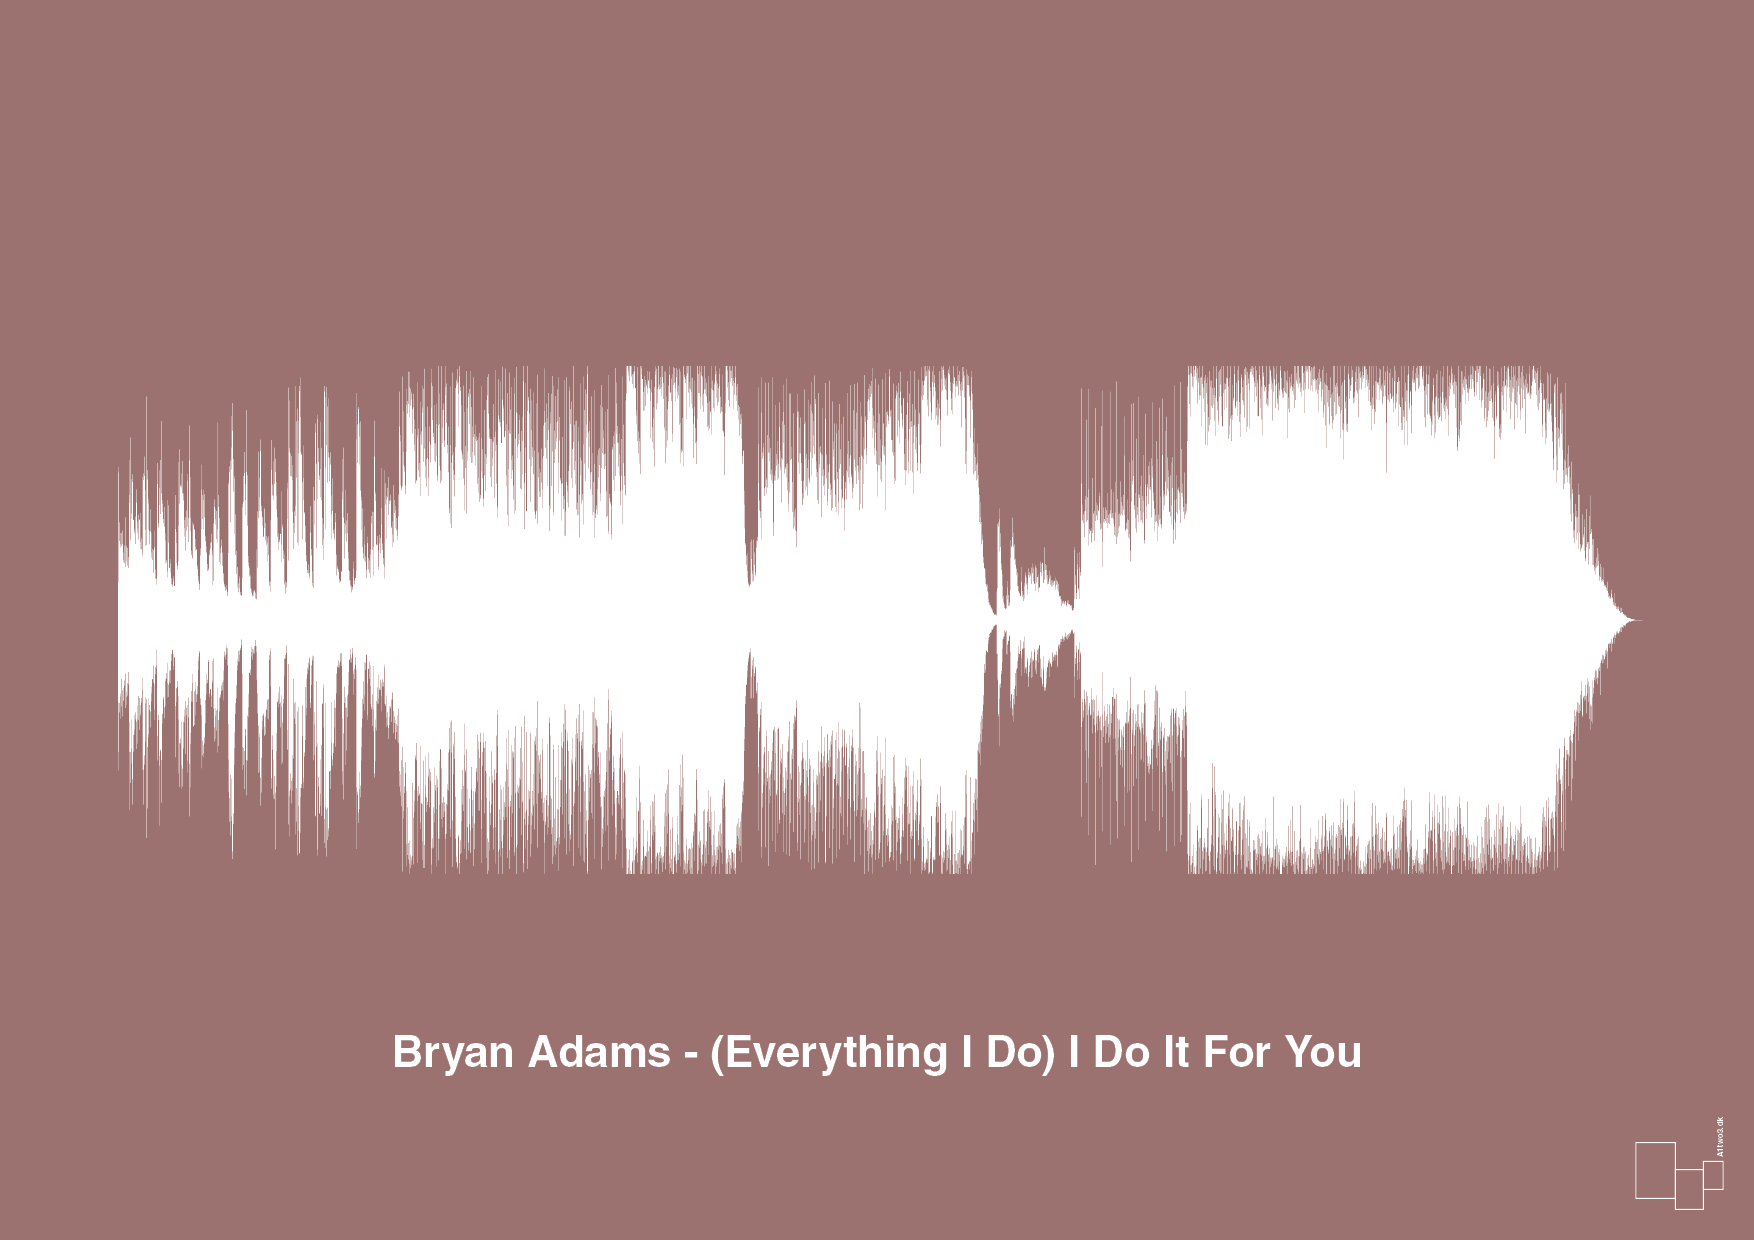 bryan adams - (everything i do) i do it for you - Plakat med Musik i Plum